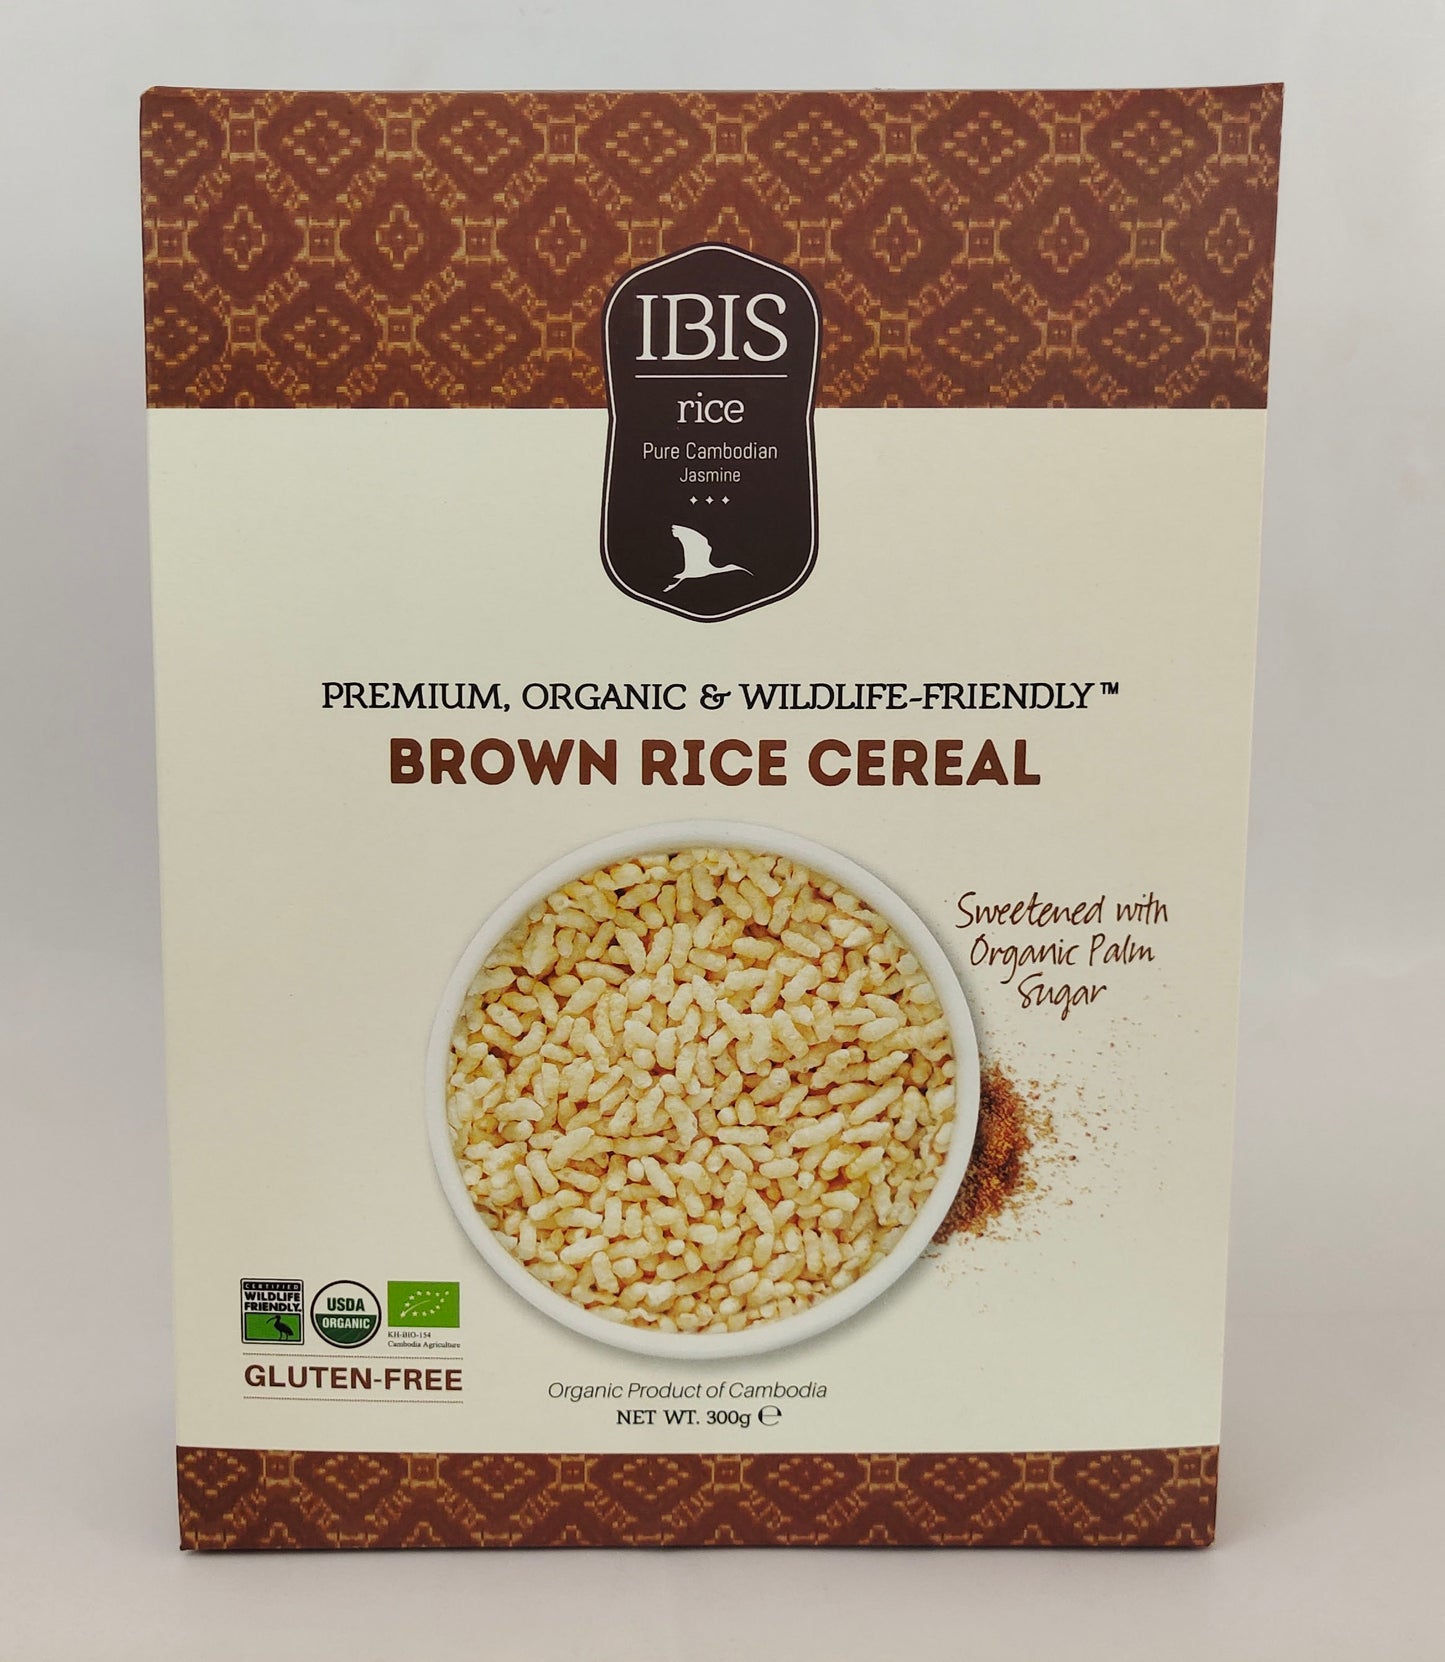 Organic Brown Rice